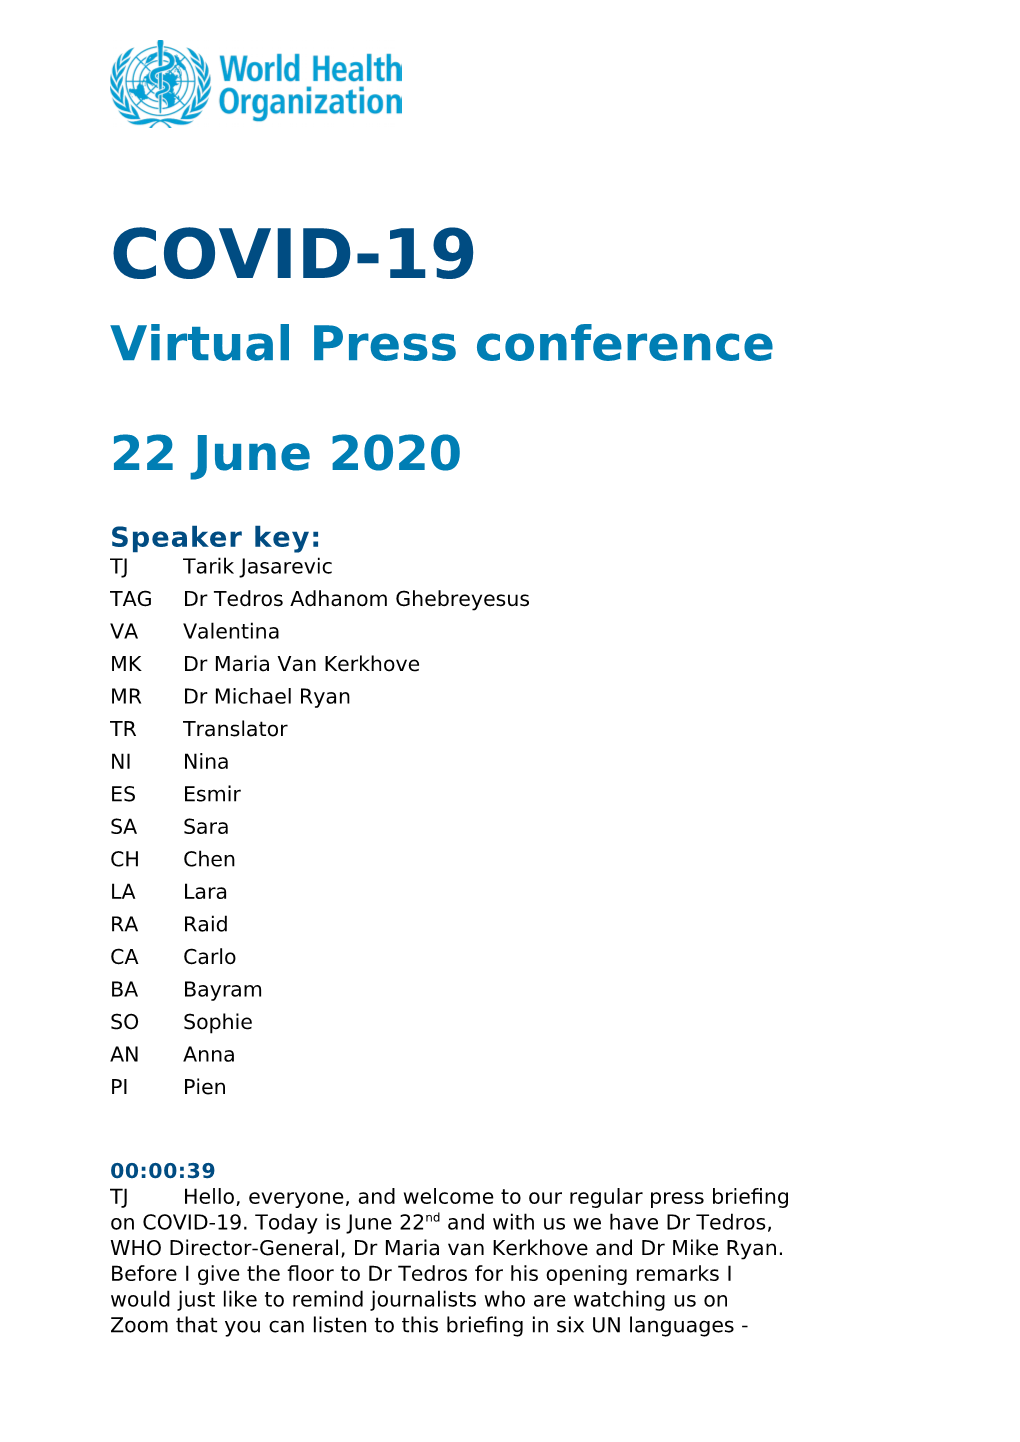 WHO Emergencies Press Conference on Coronavirus Disease